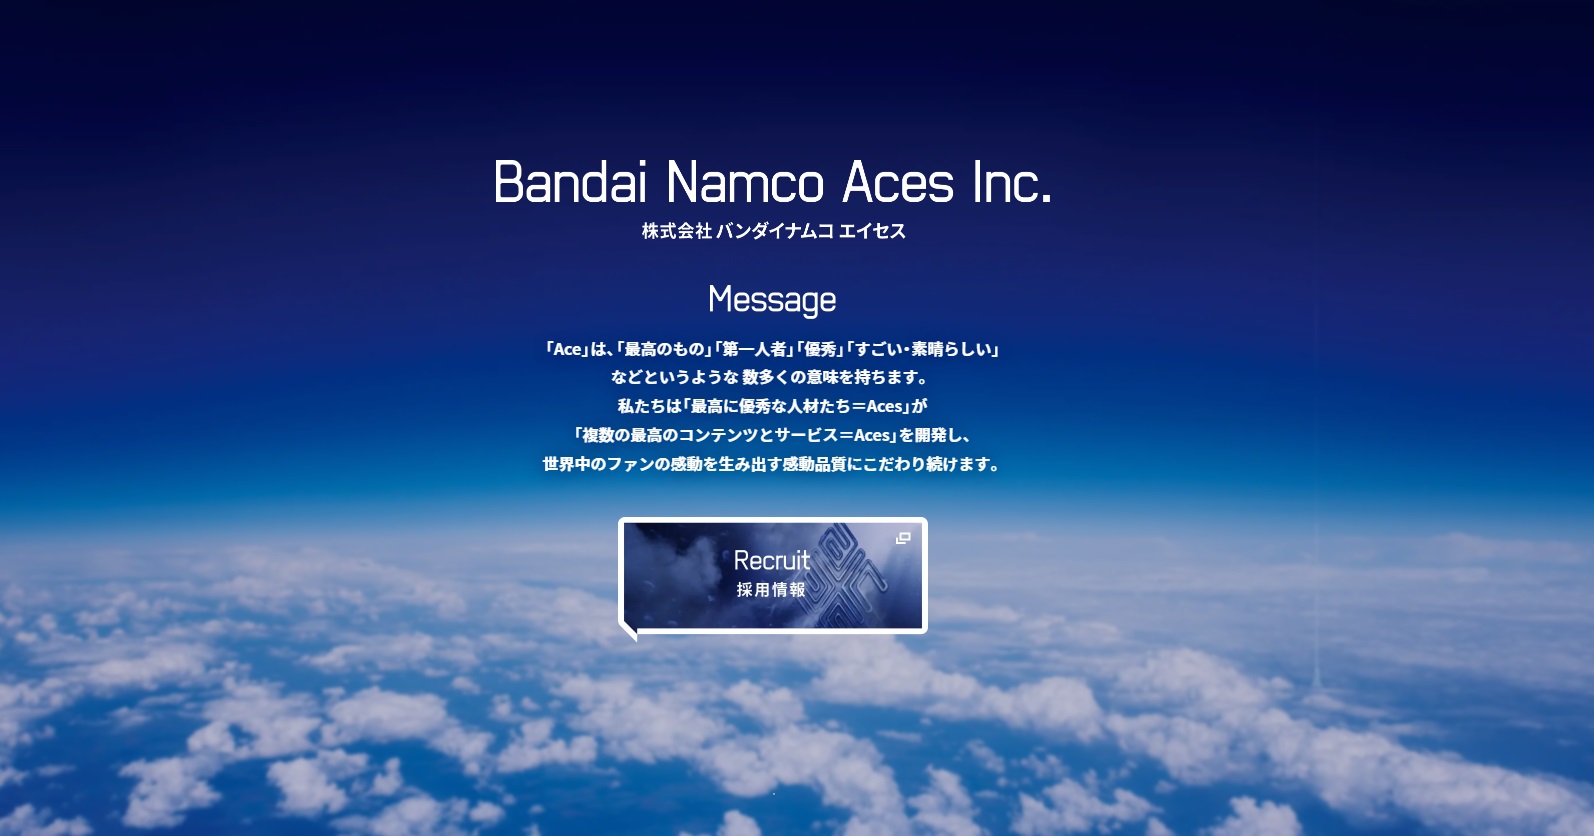 Bandai Namco establishes Bandai Namco Aces to make Ace Combat and other high-end games